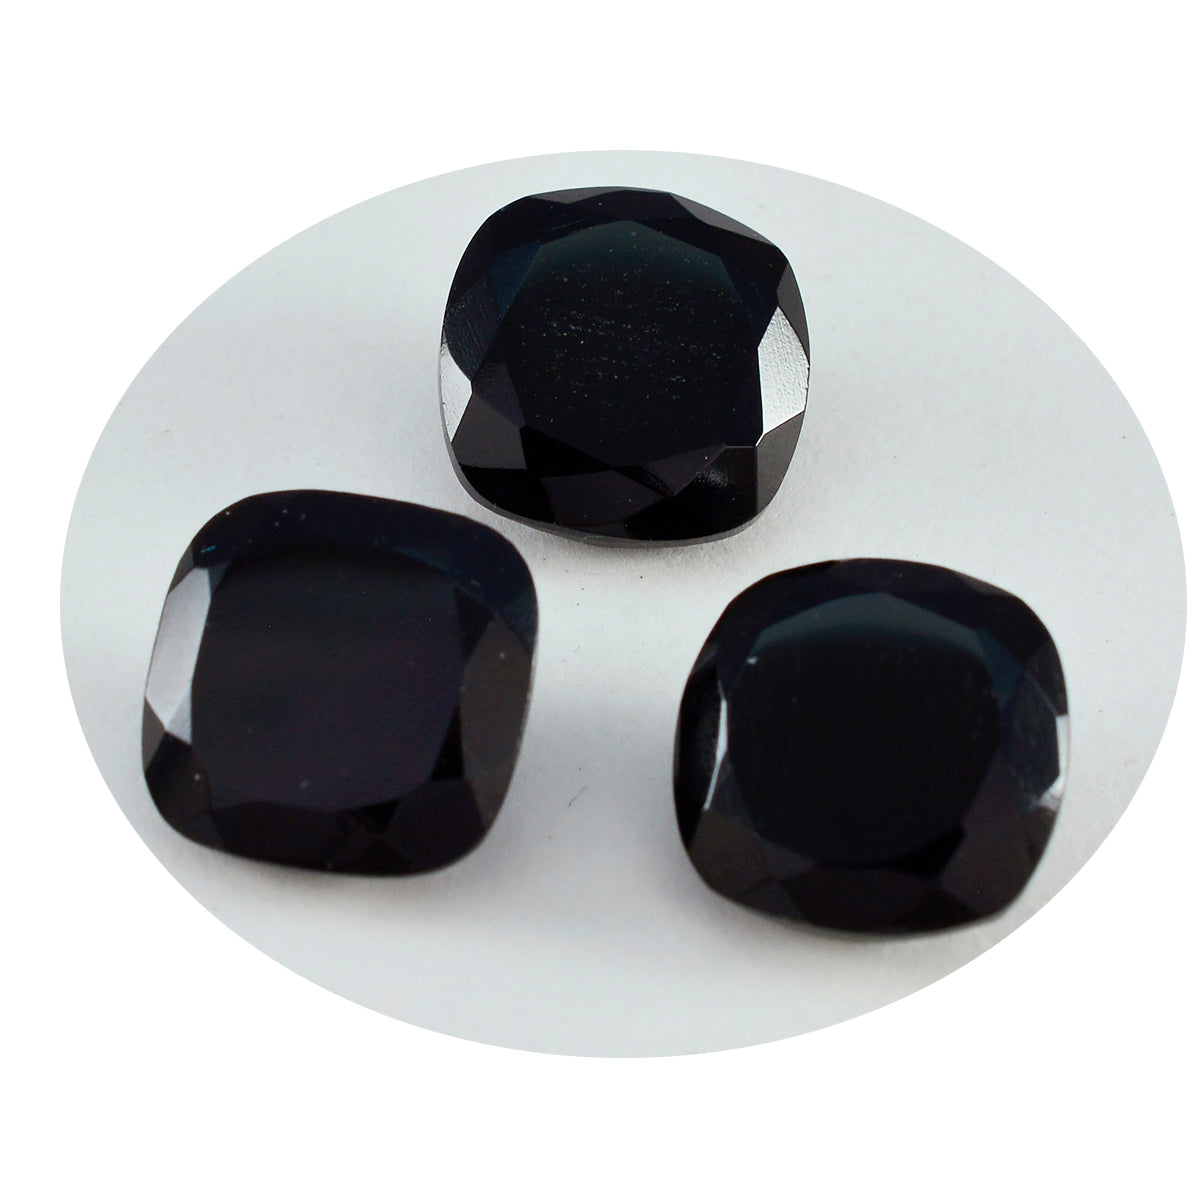 Riyogems 1PC Real Black Onyx Faceted 13x13 mm Cushion Shape nice-looking Quality Stone